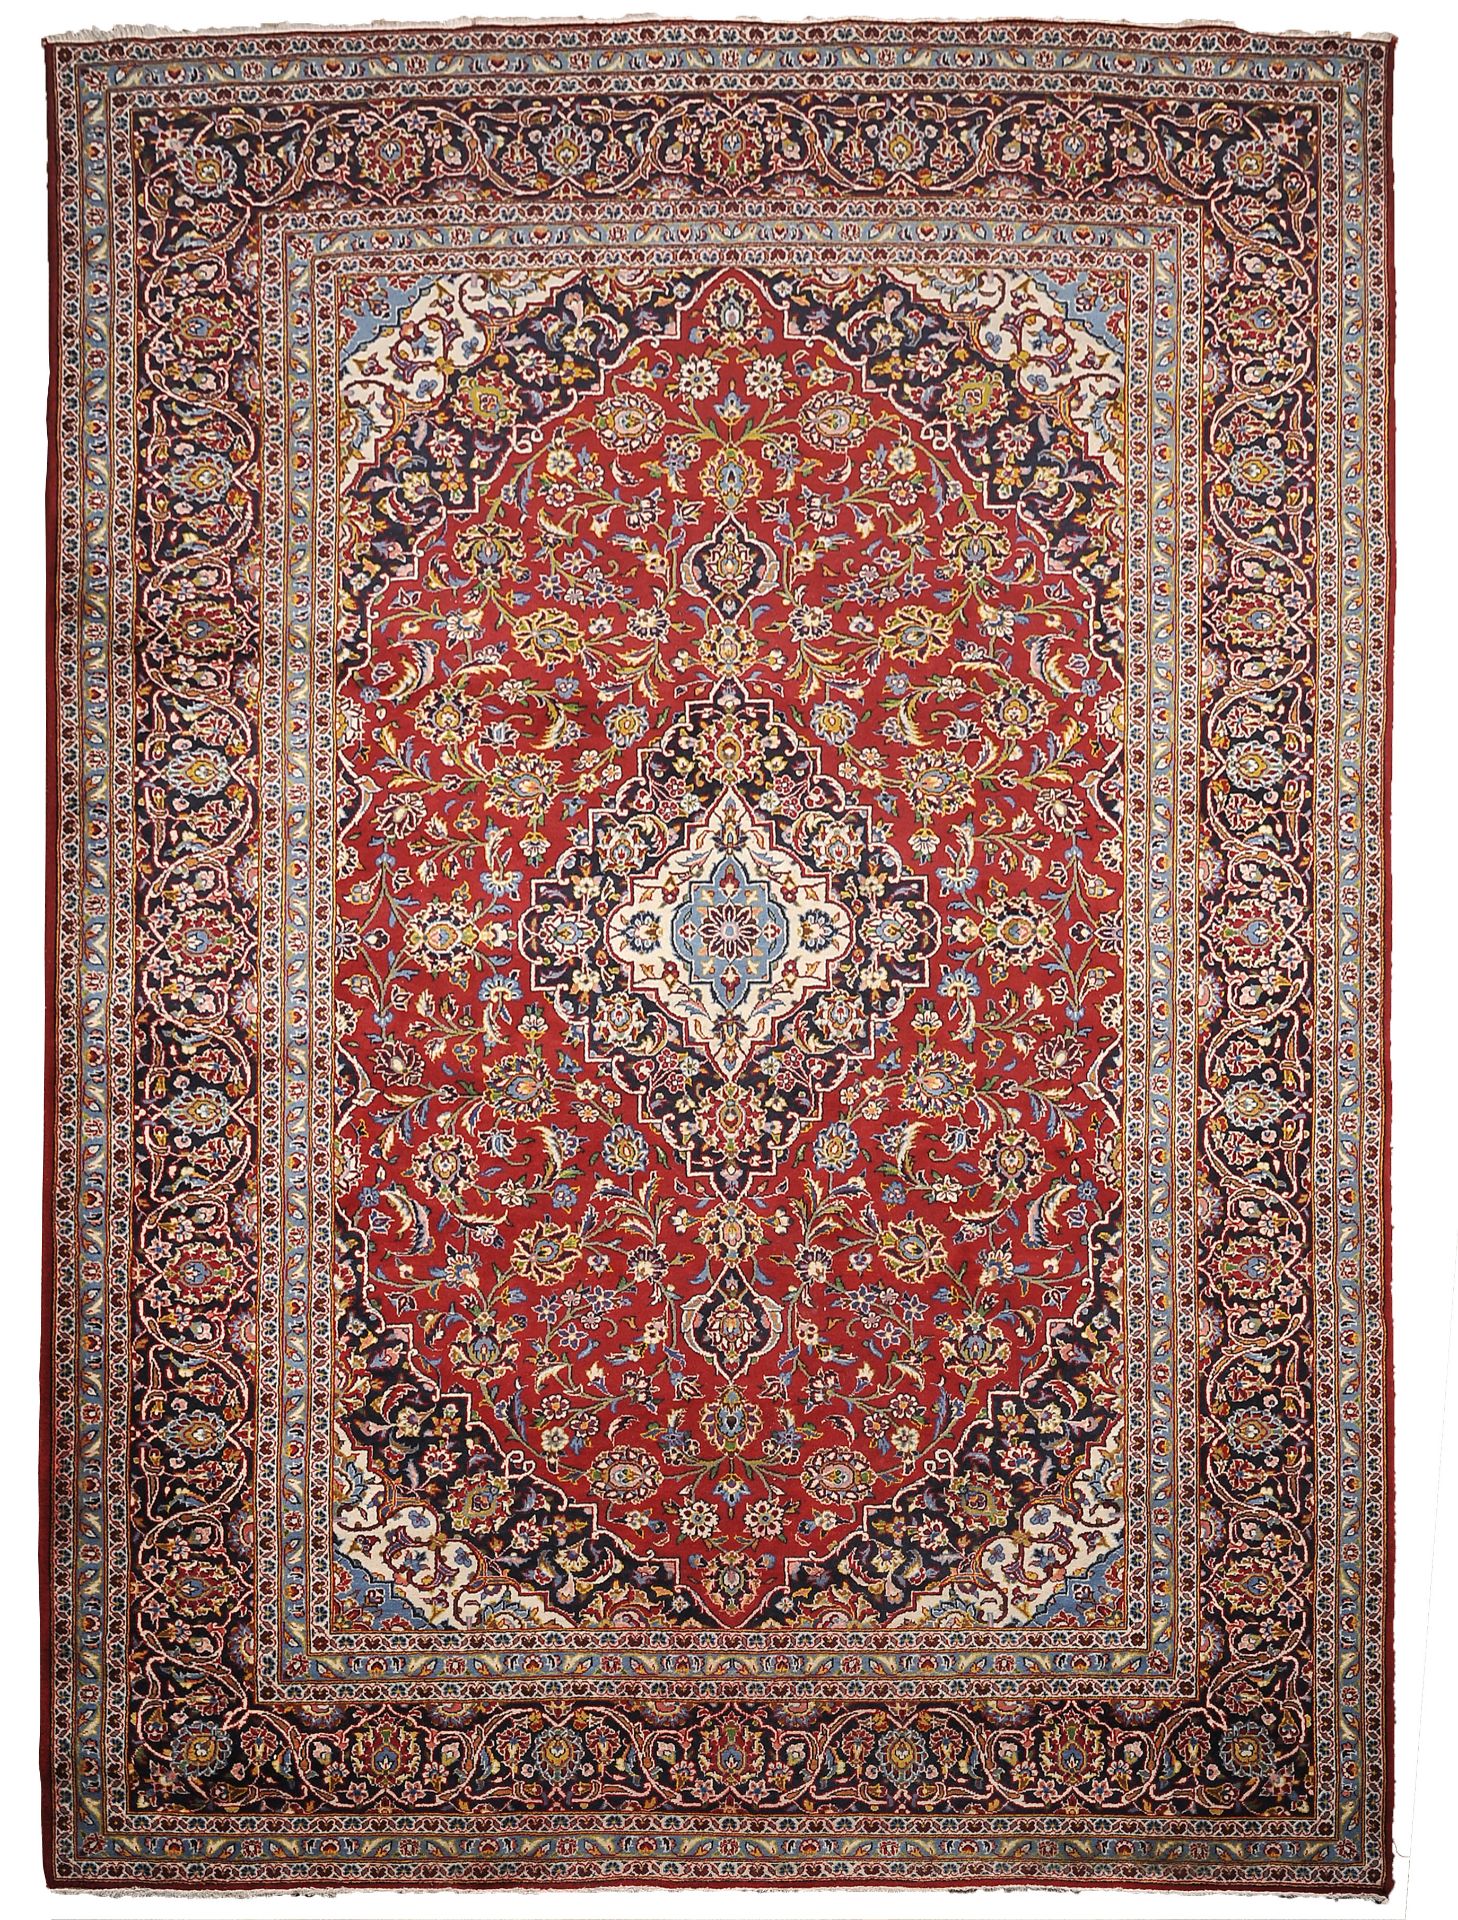 A "Keshan" carpet